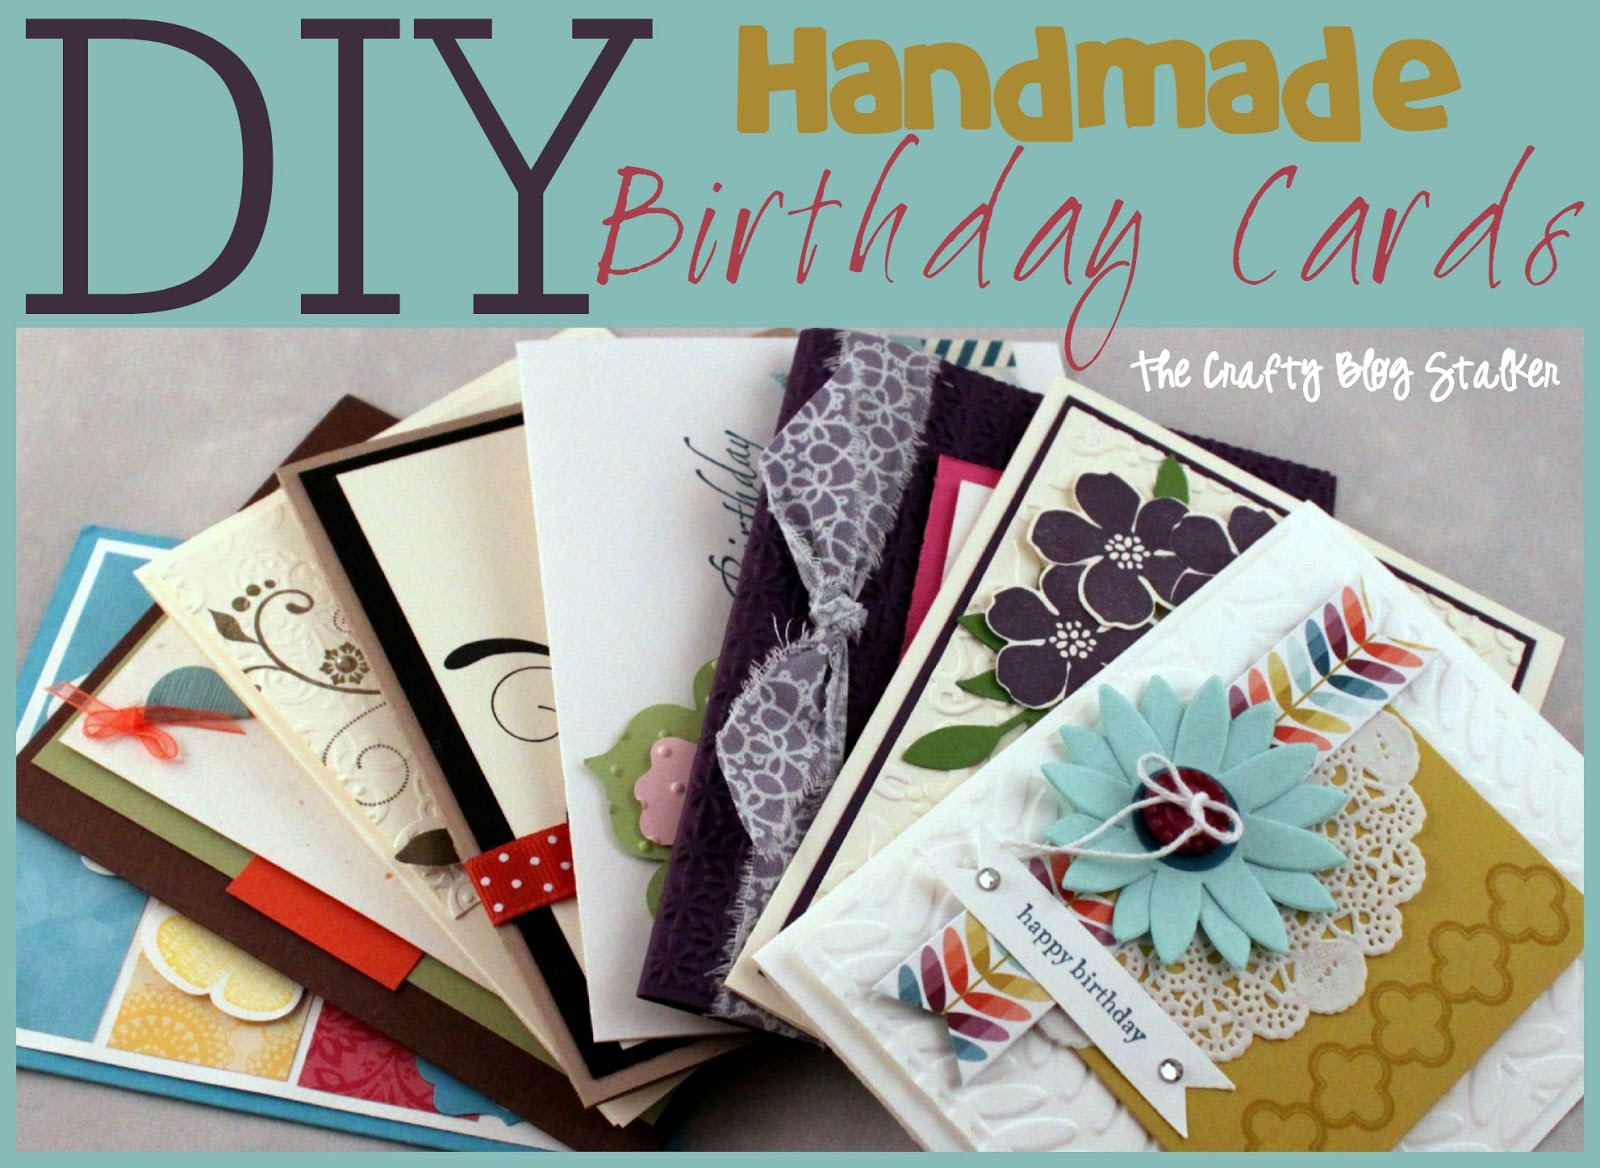 Handmade Cards Ideas Birthday Handmade Birthday Card Ideas The Crafty Blog Stalker